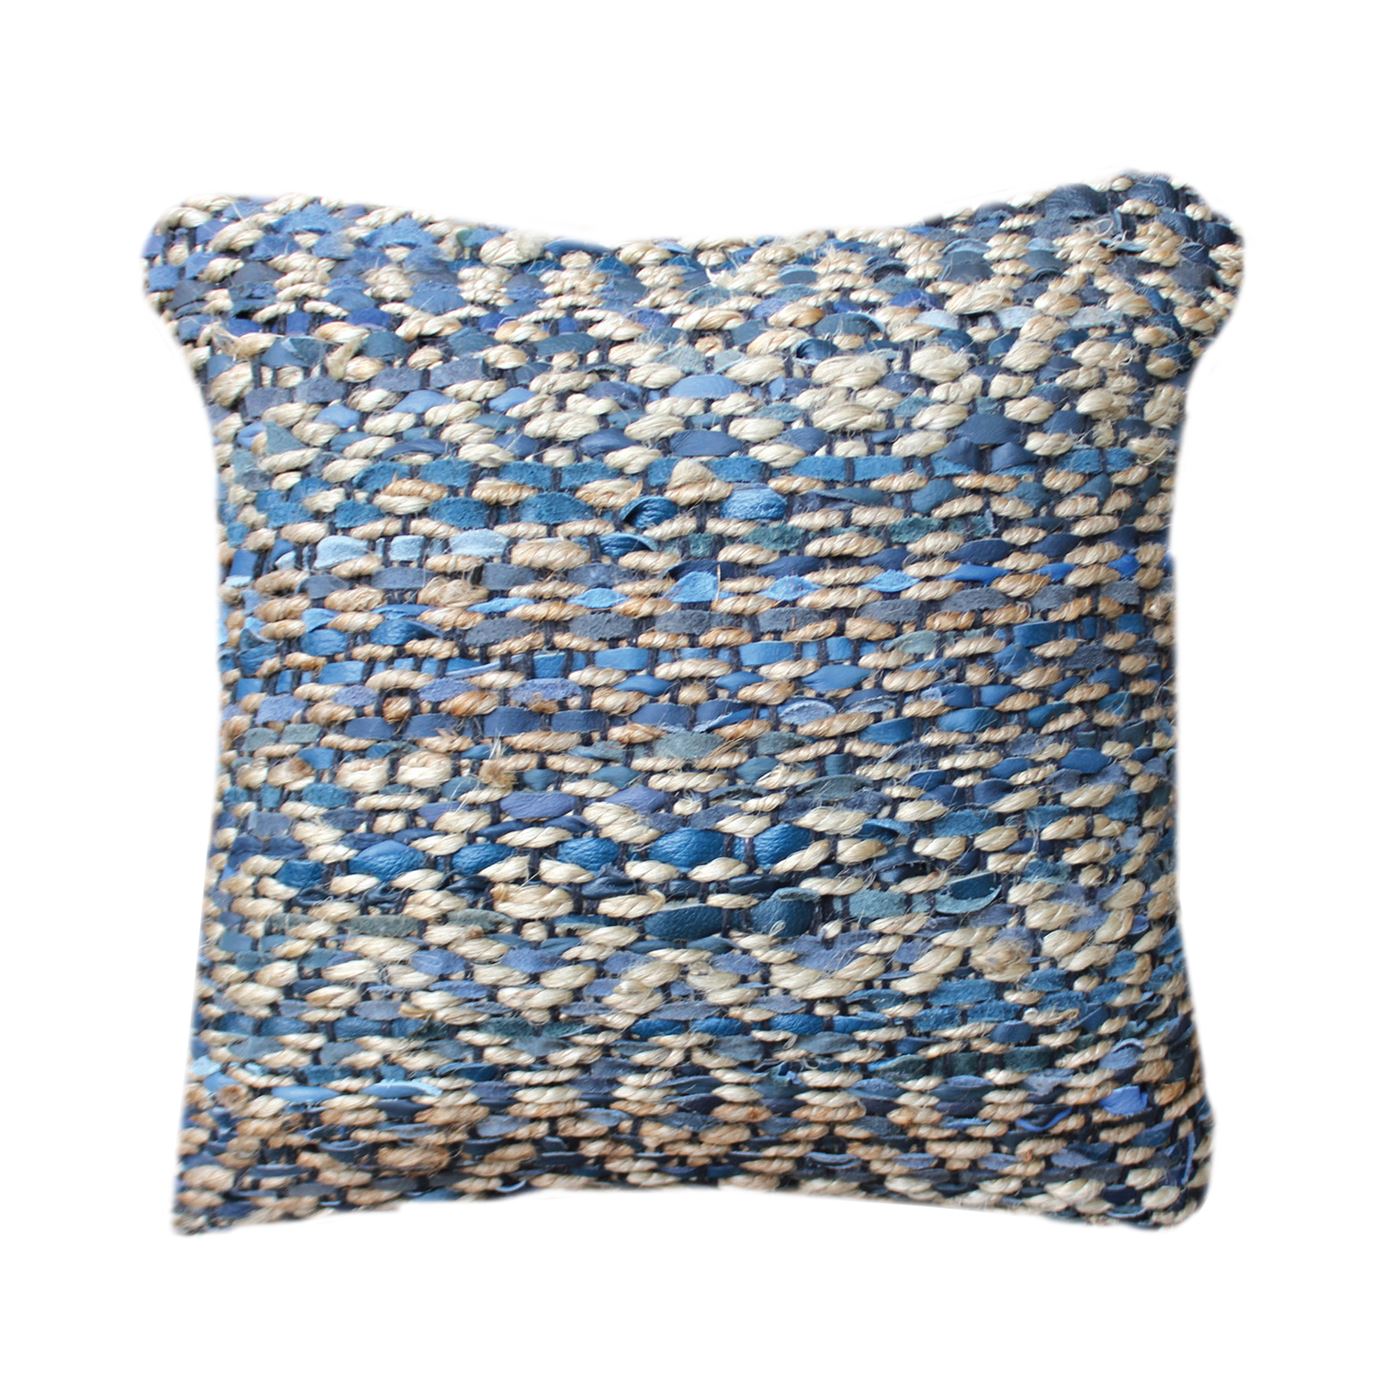 Morawa Pillow, Hemp, Leather, Natural, Blue, Pitloom, Flat Weave